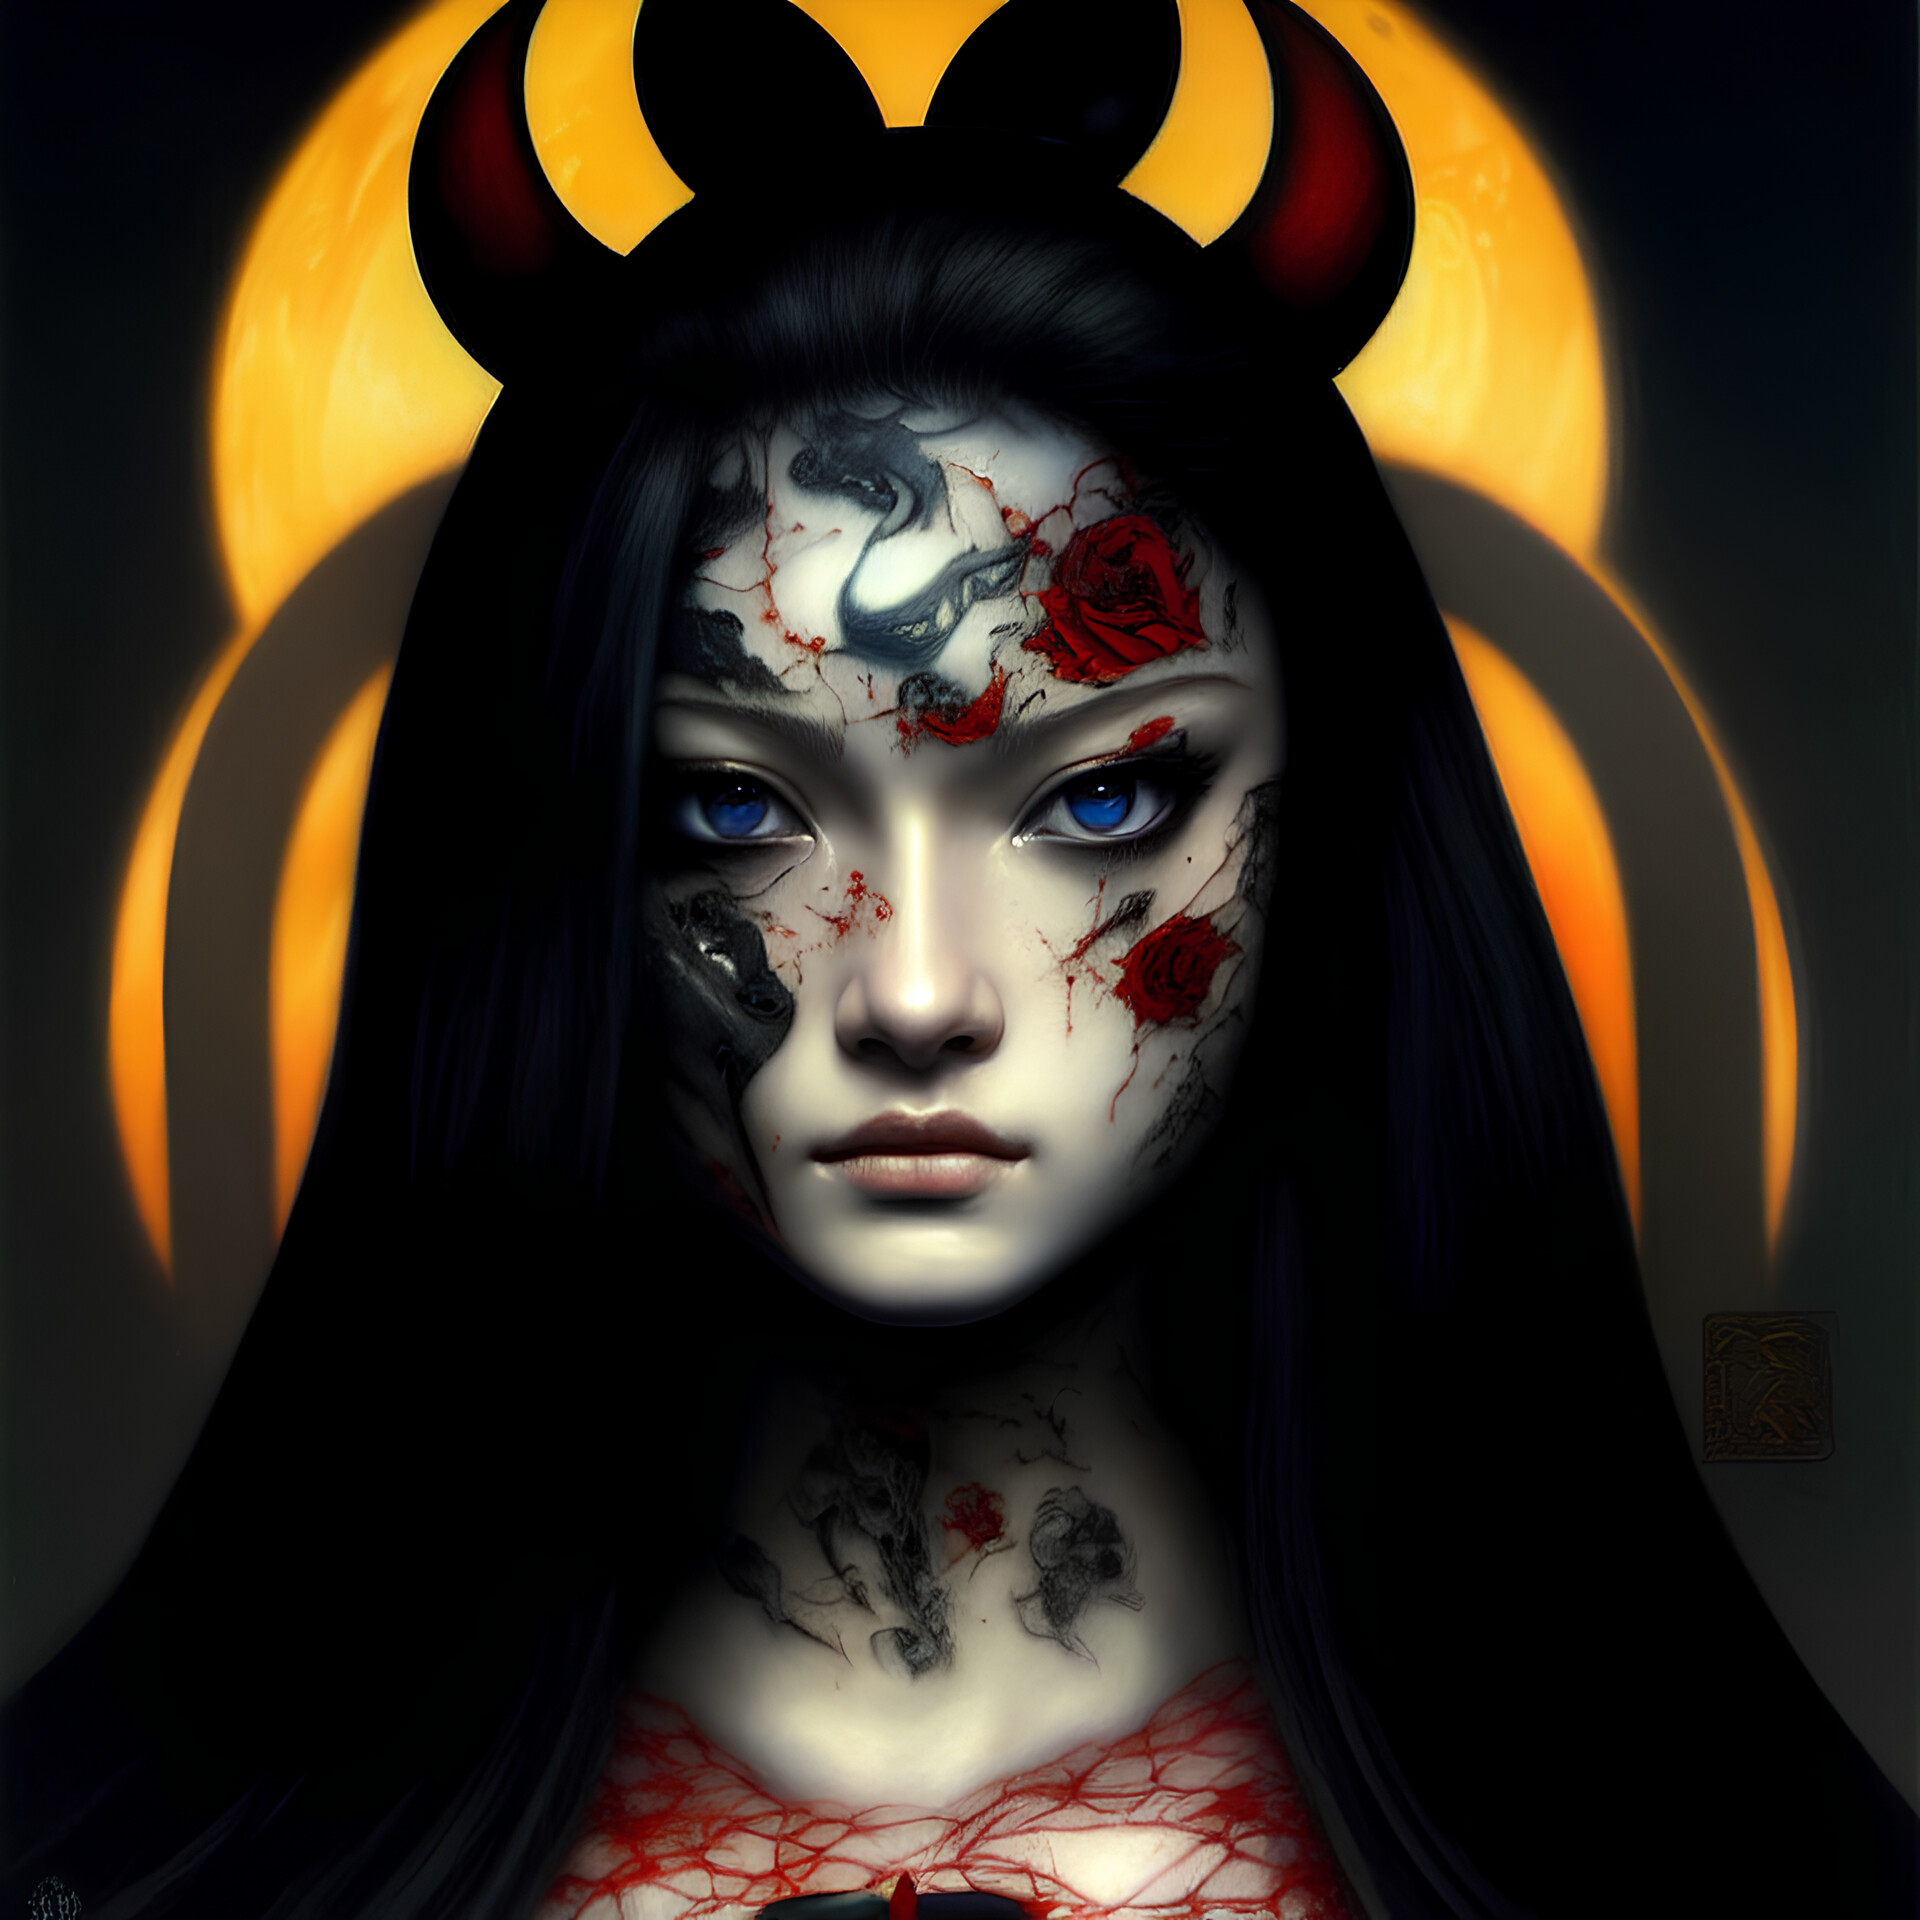 ArtStation - Young demon Princess portraits